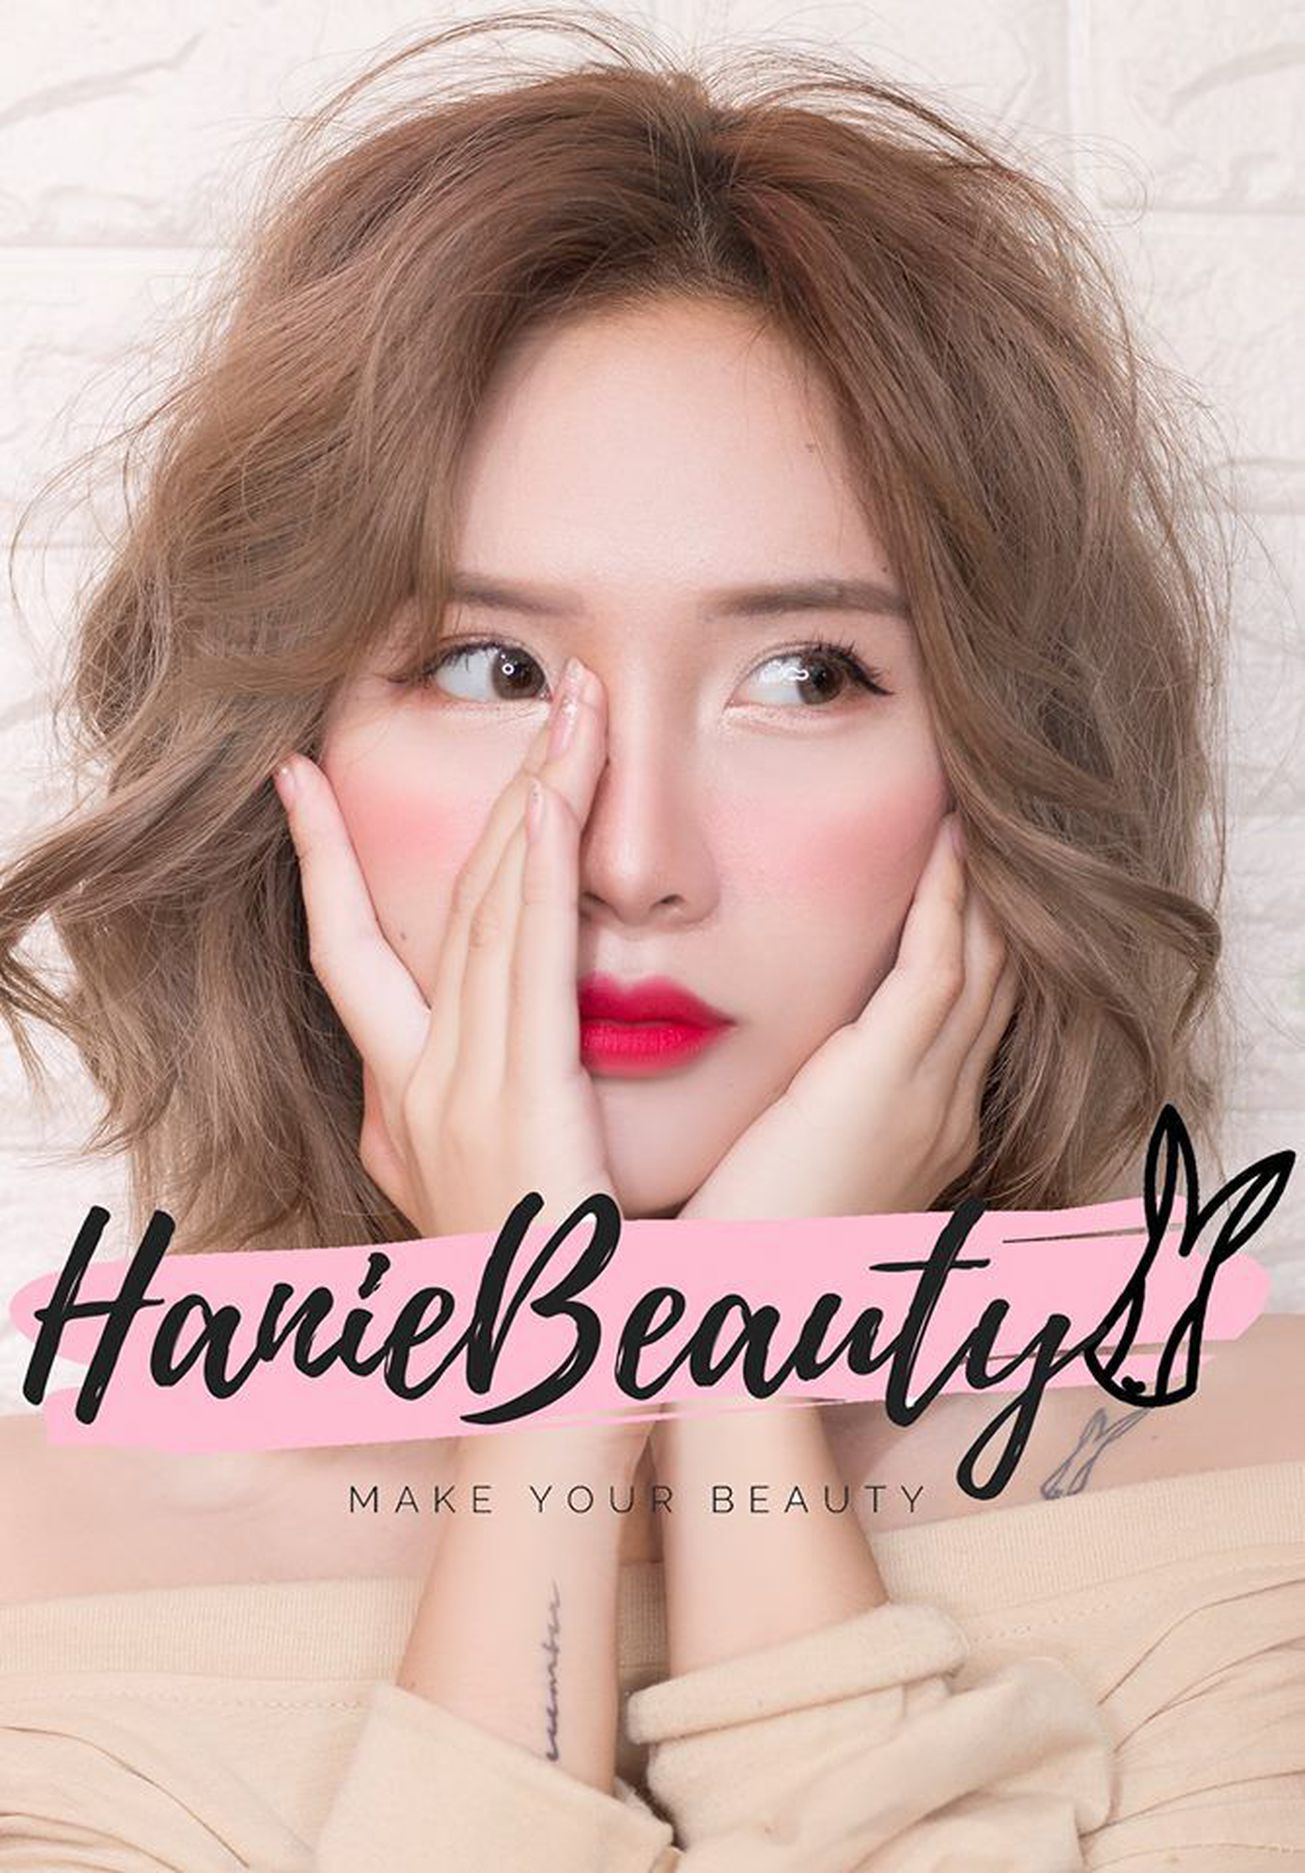 Hanie Beauty Salon 1 gallaries